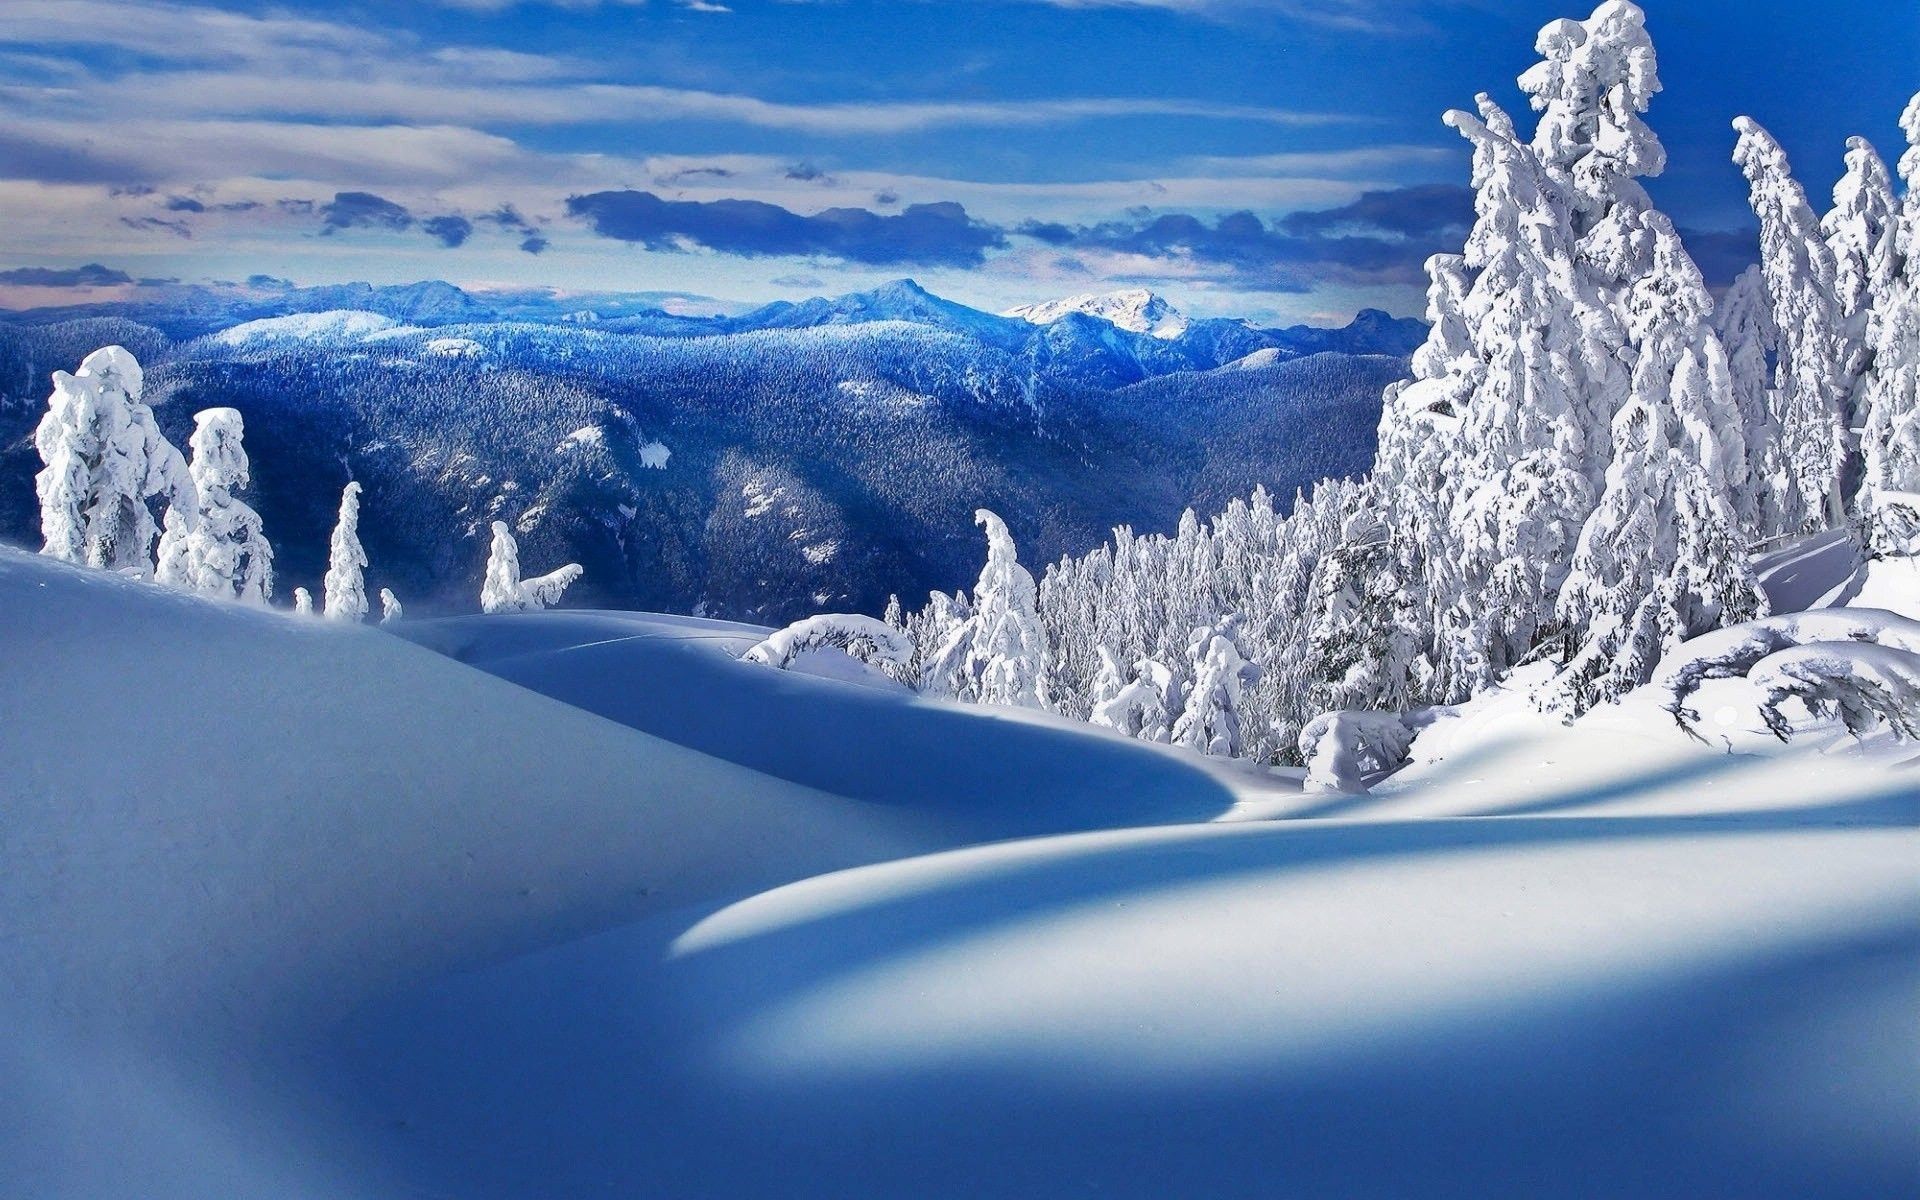 Beautiful Winter Scenery Wallpaper. Beautiful winter scenery wallpaper. Scenery wallpaper, Winter landscape, Winter scenery